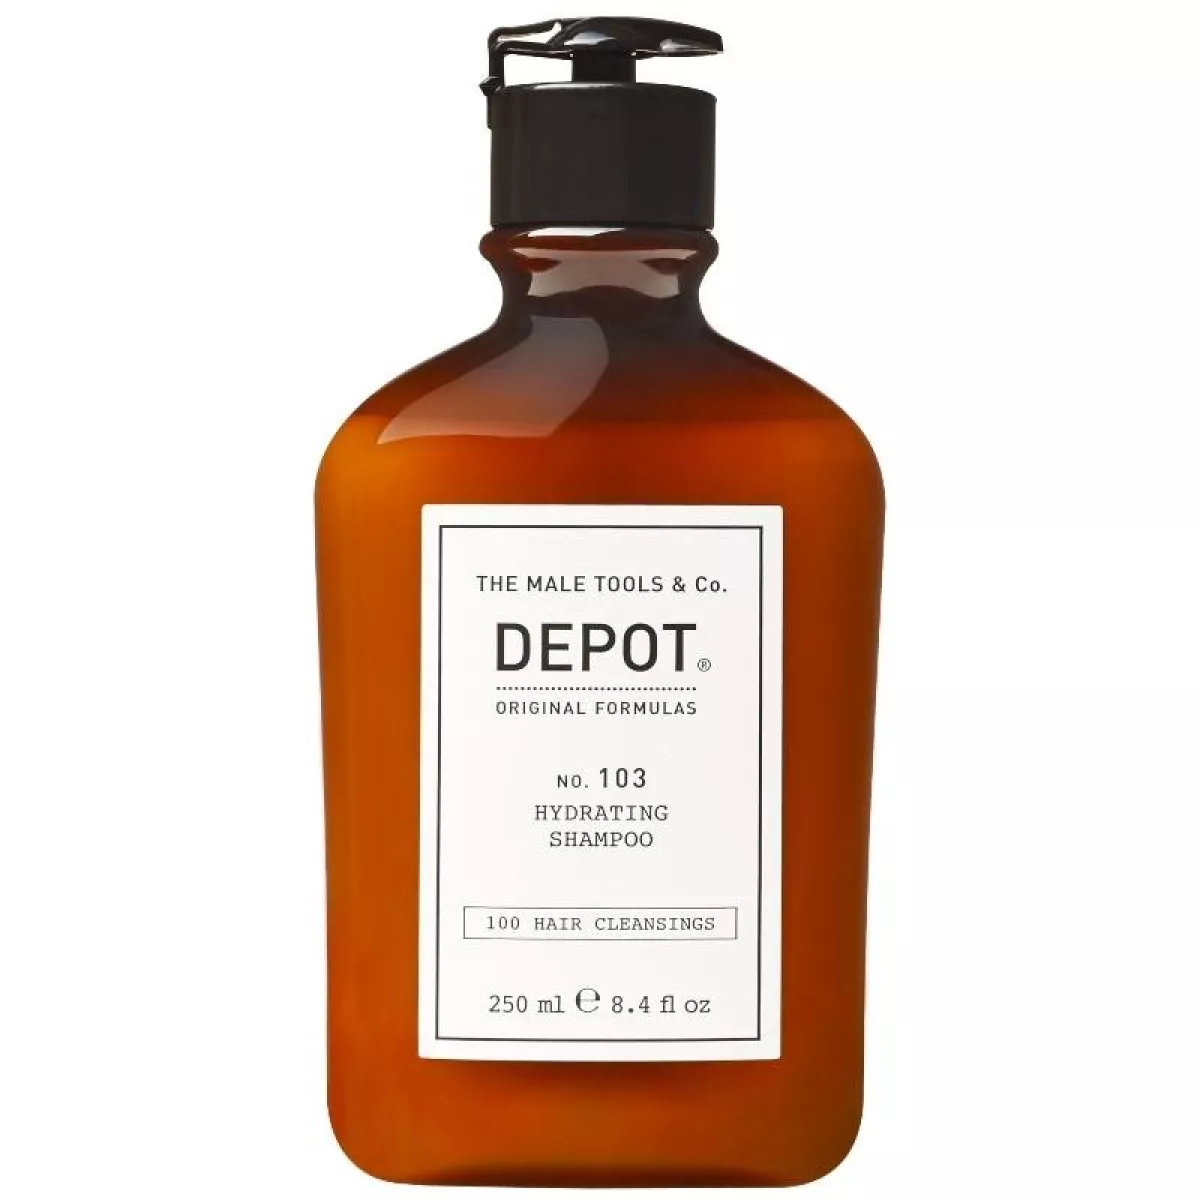 #1 - Depot No. 103 Hydrating Shampoo 250 ml